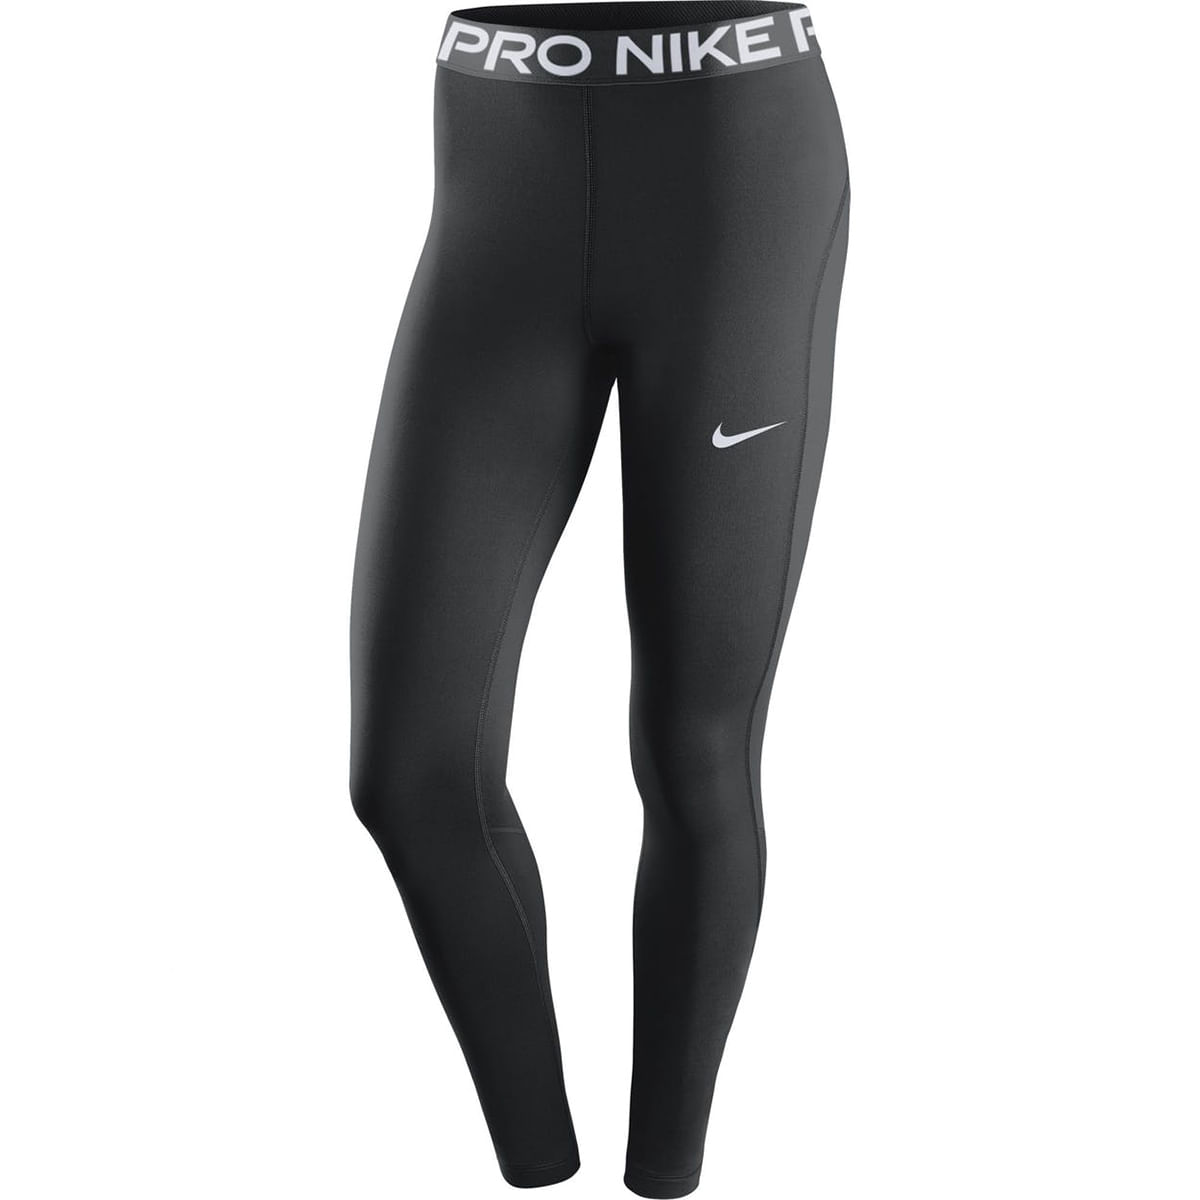 Nike pro black tights - Gem